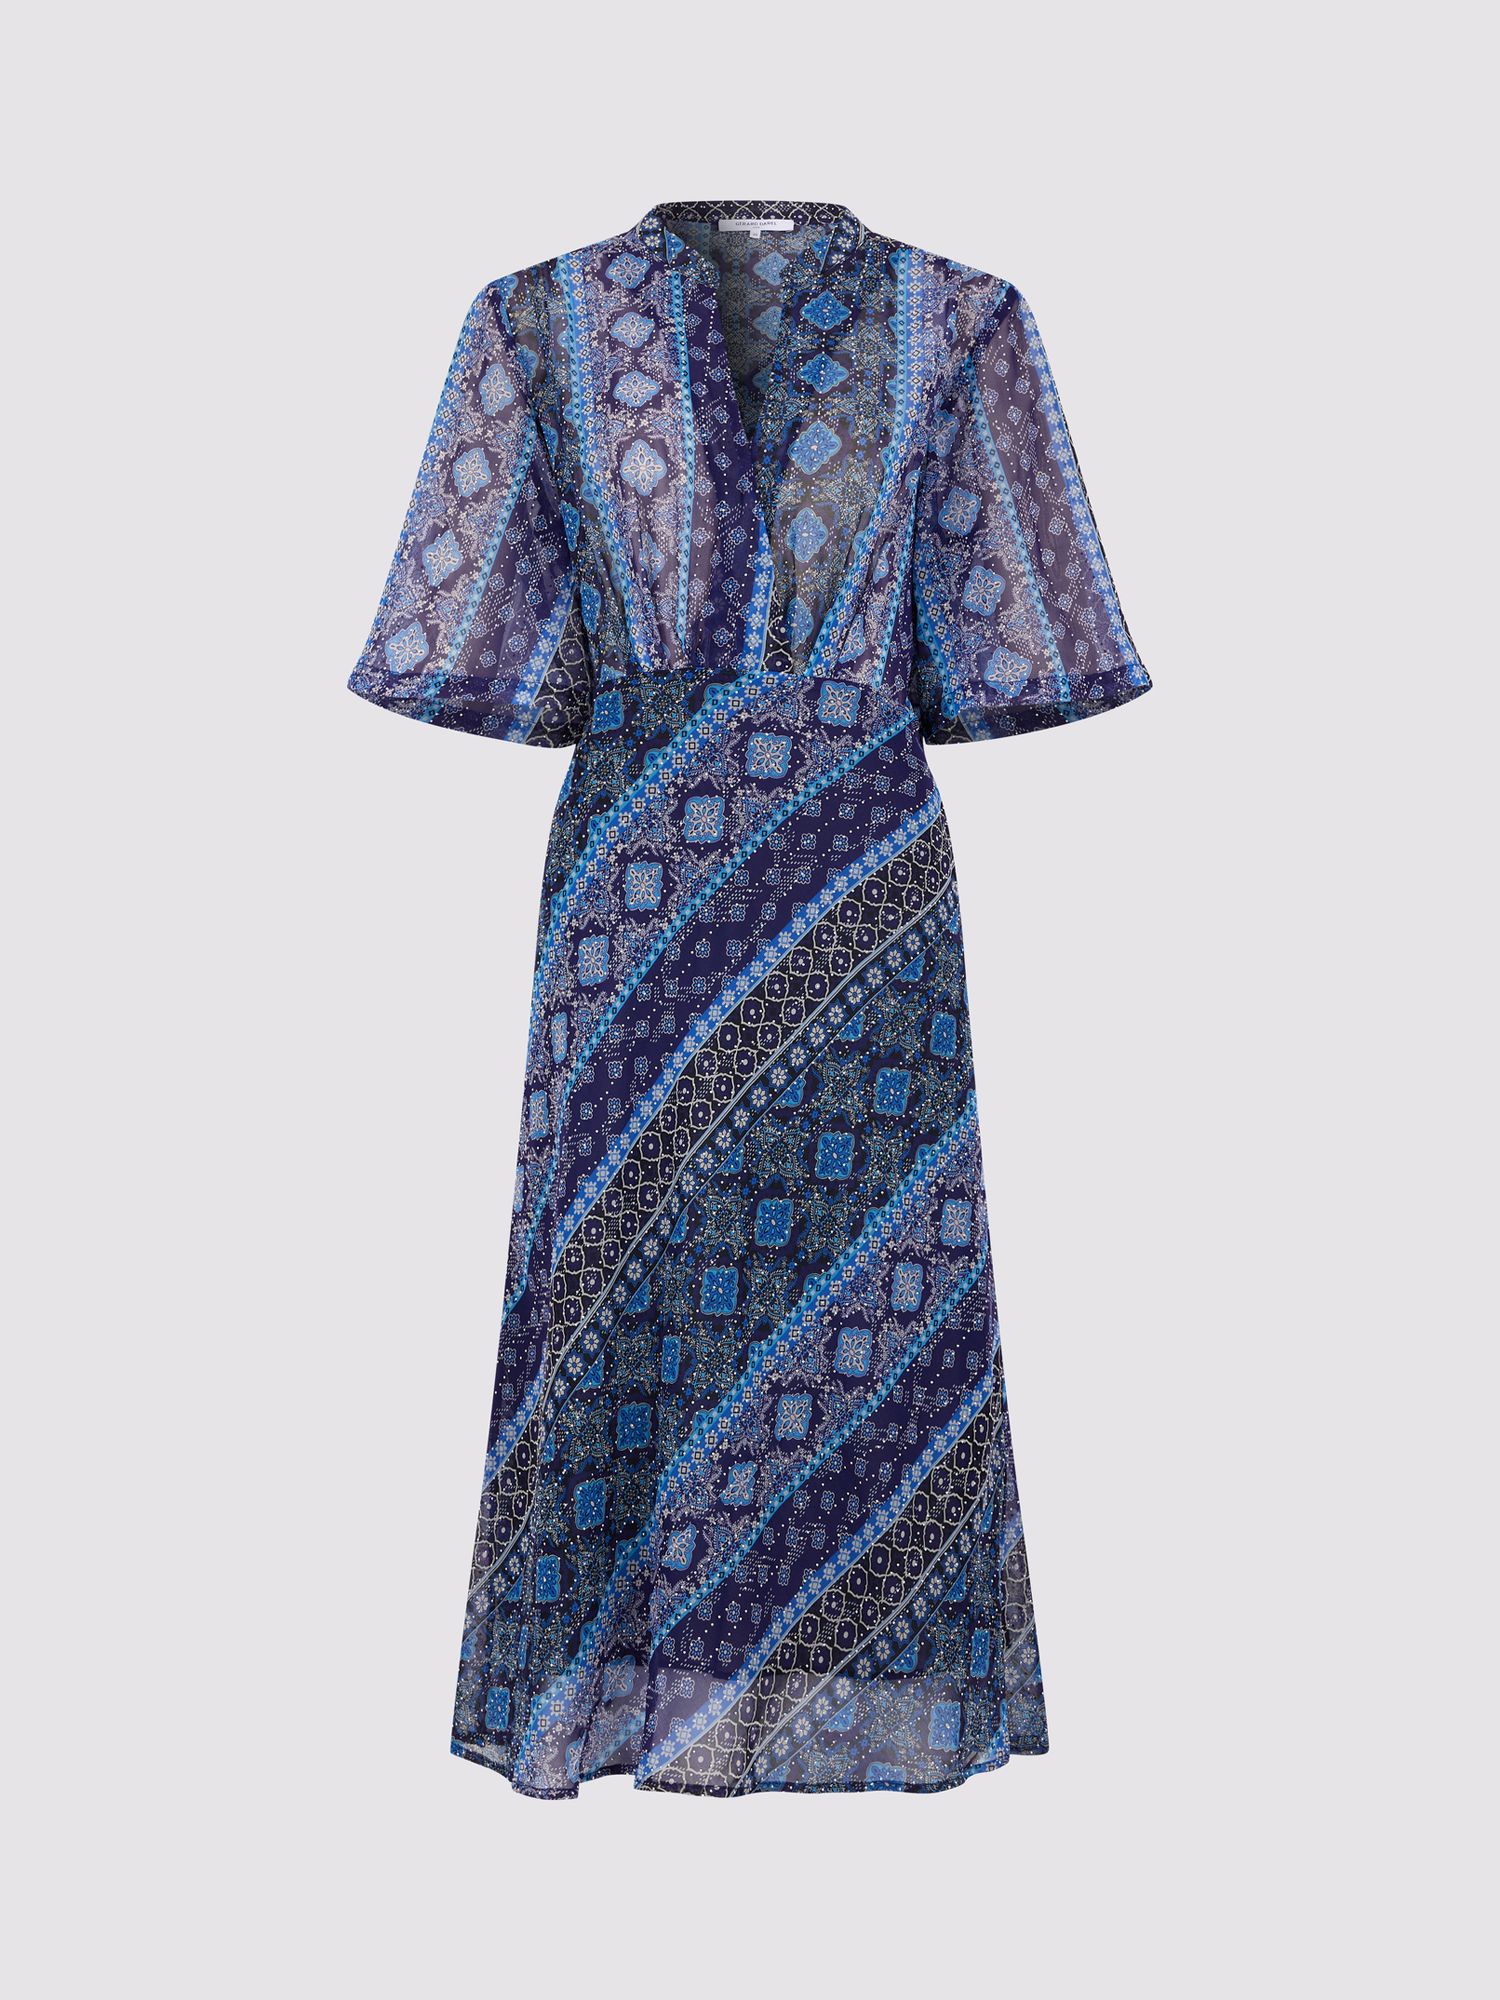 Gerard Darel Elia Stud Embellished Midi Dress, Indigo/Multi, 10